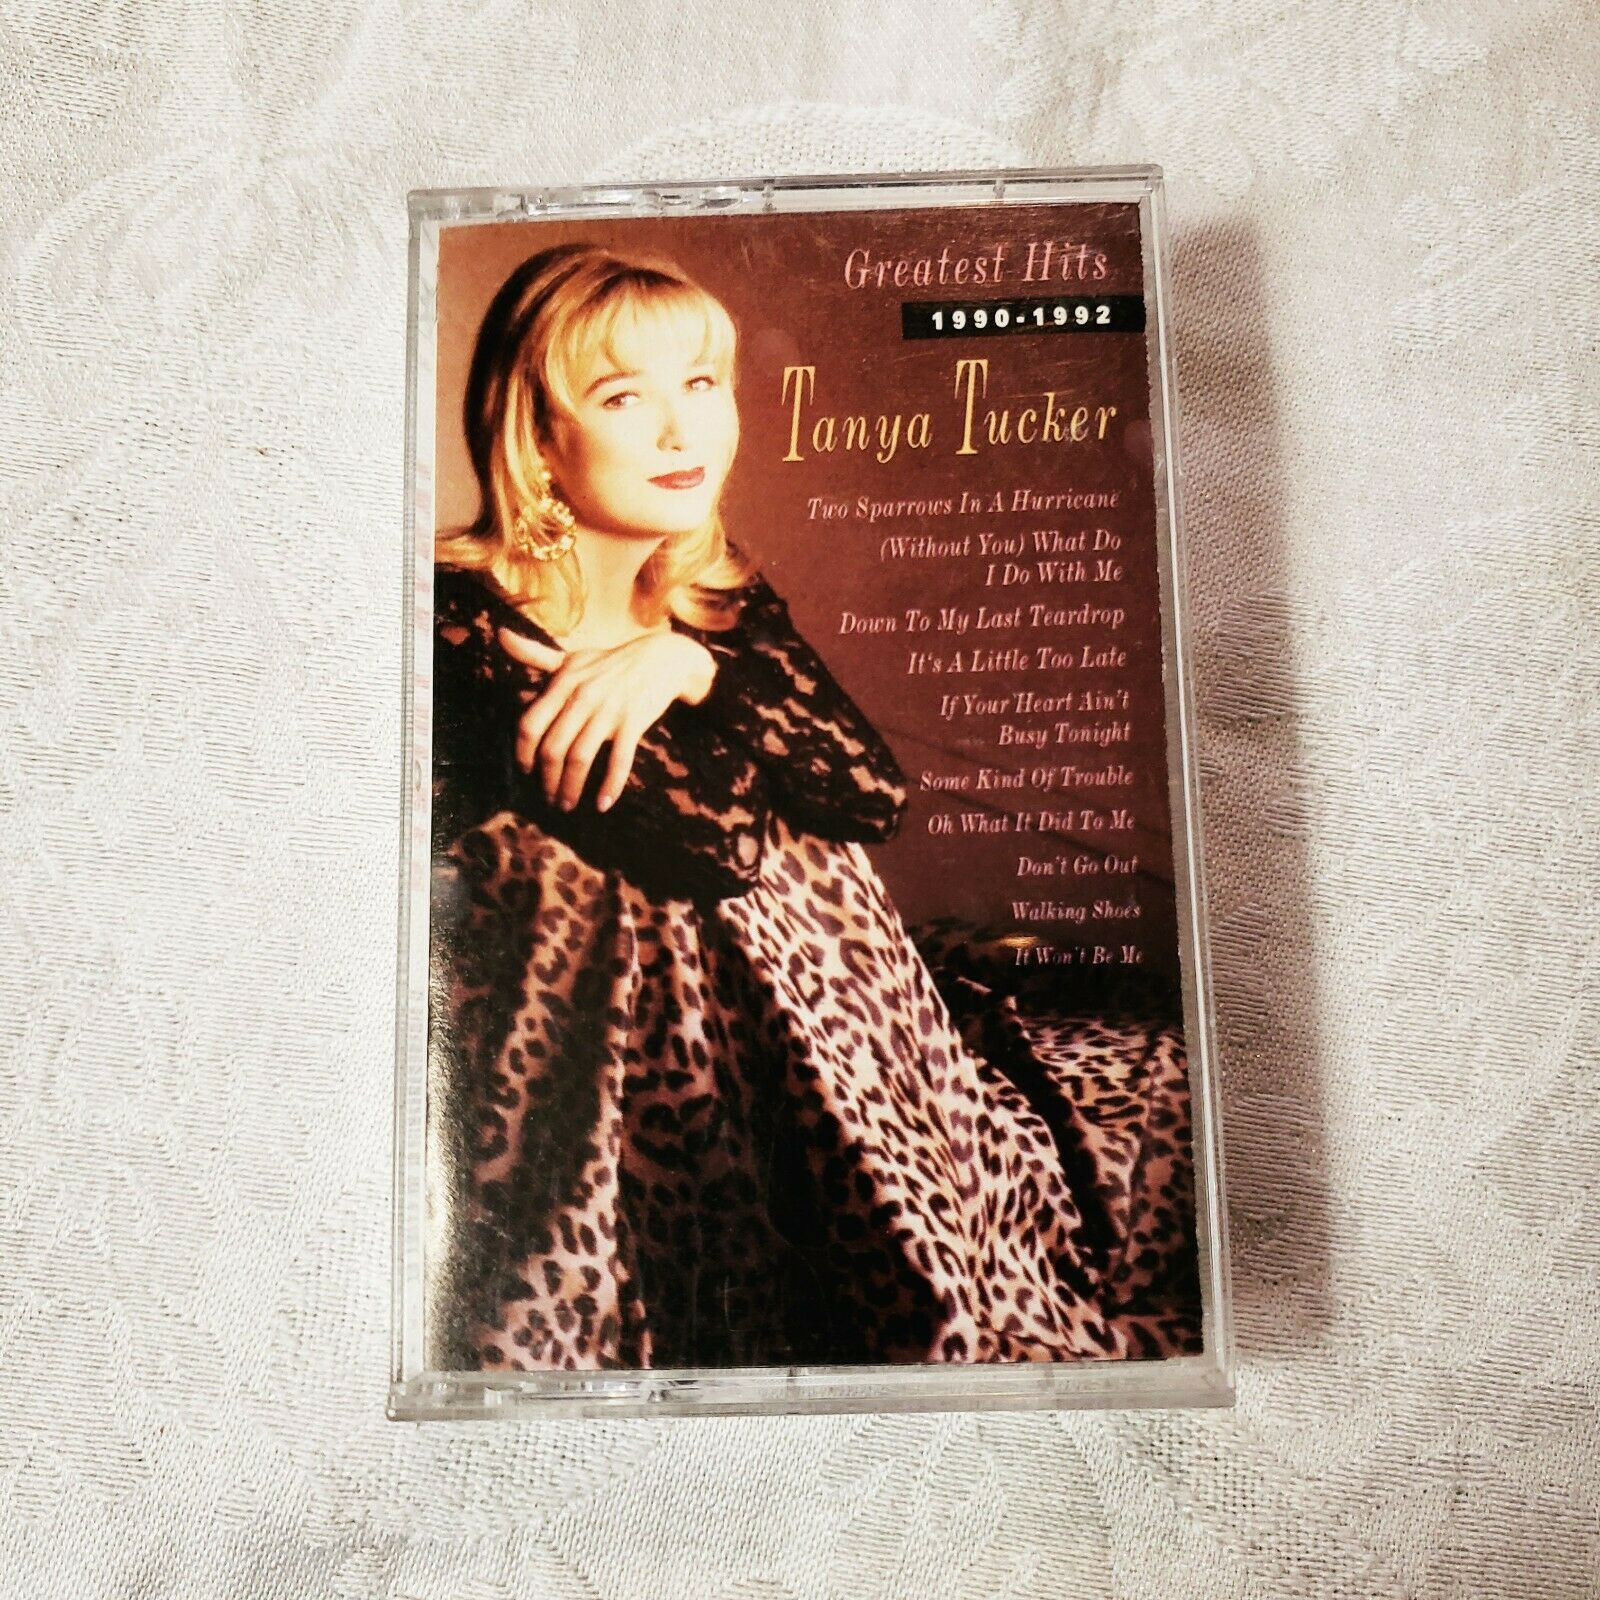 Tanya Tucker Greatest Hits 1990-1992 Audio Cassette "Walking Shoes"